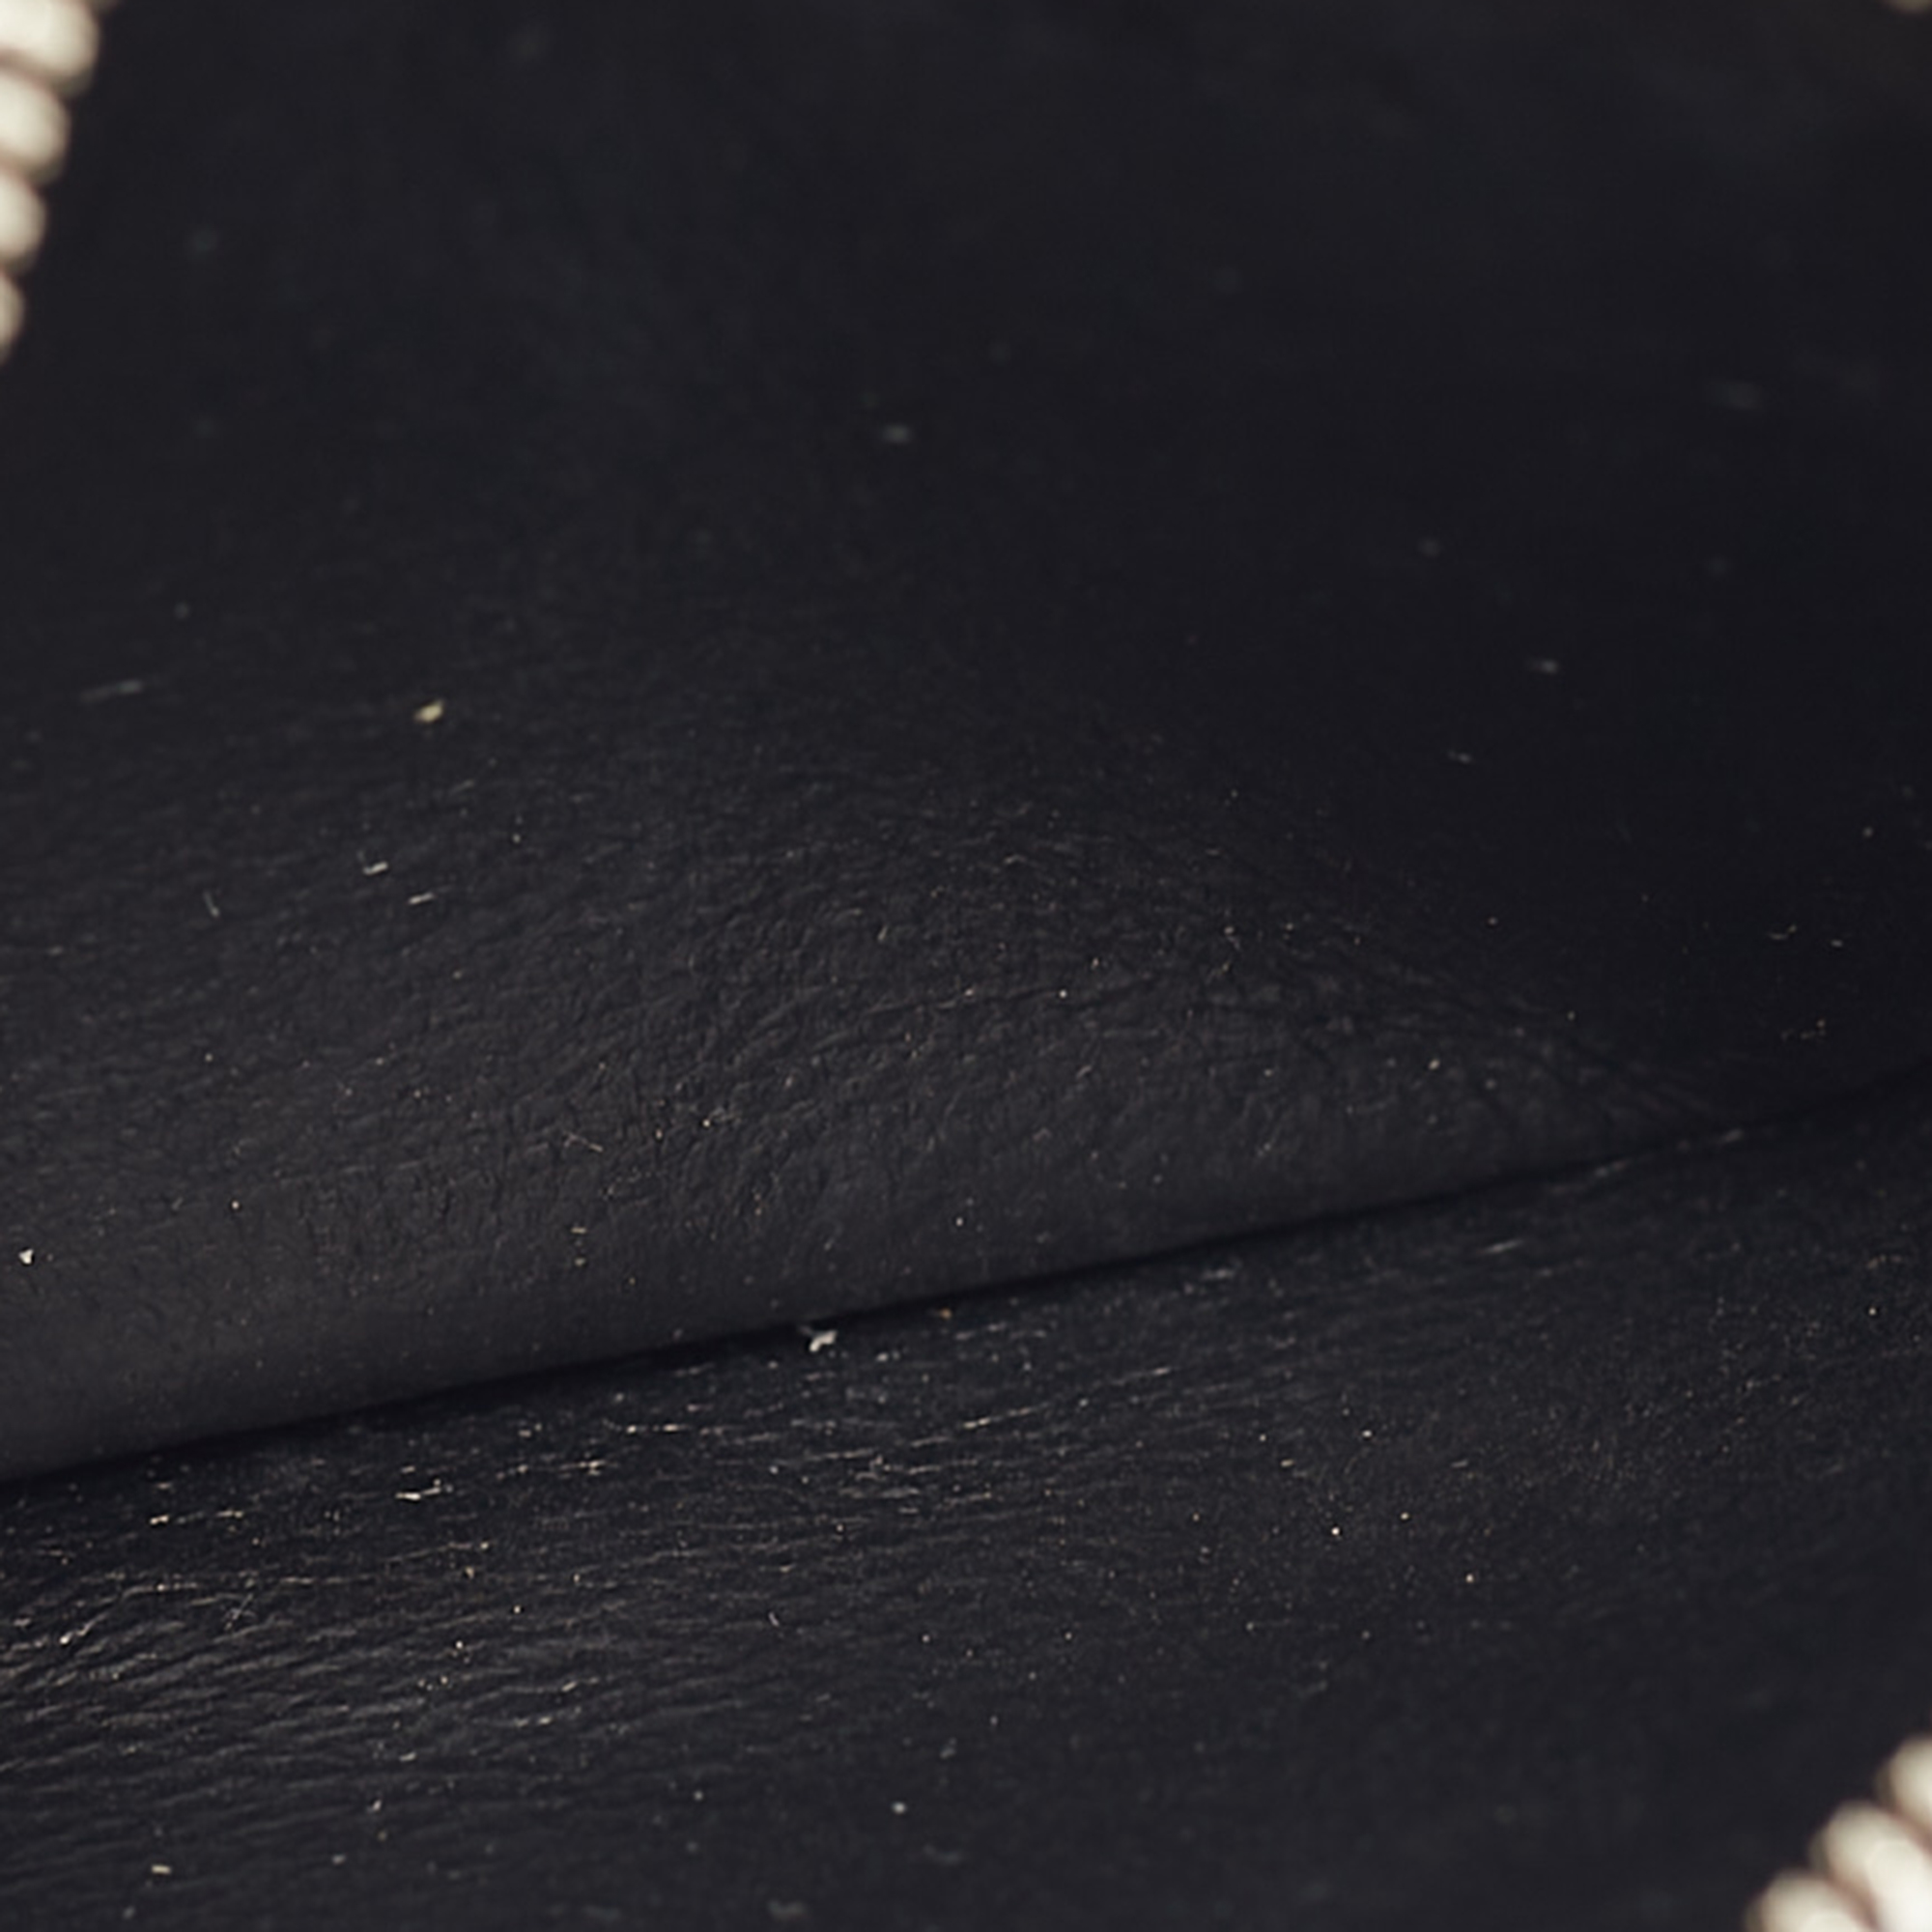 Balenciaga Black/White Leather Dubai Zip Card Holder With Strap